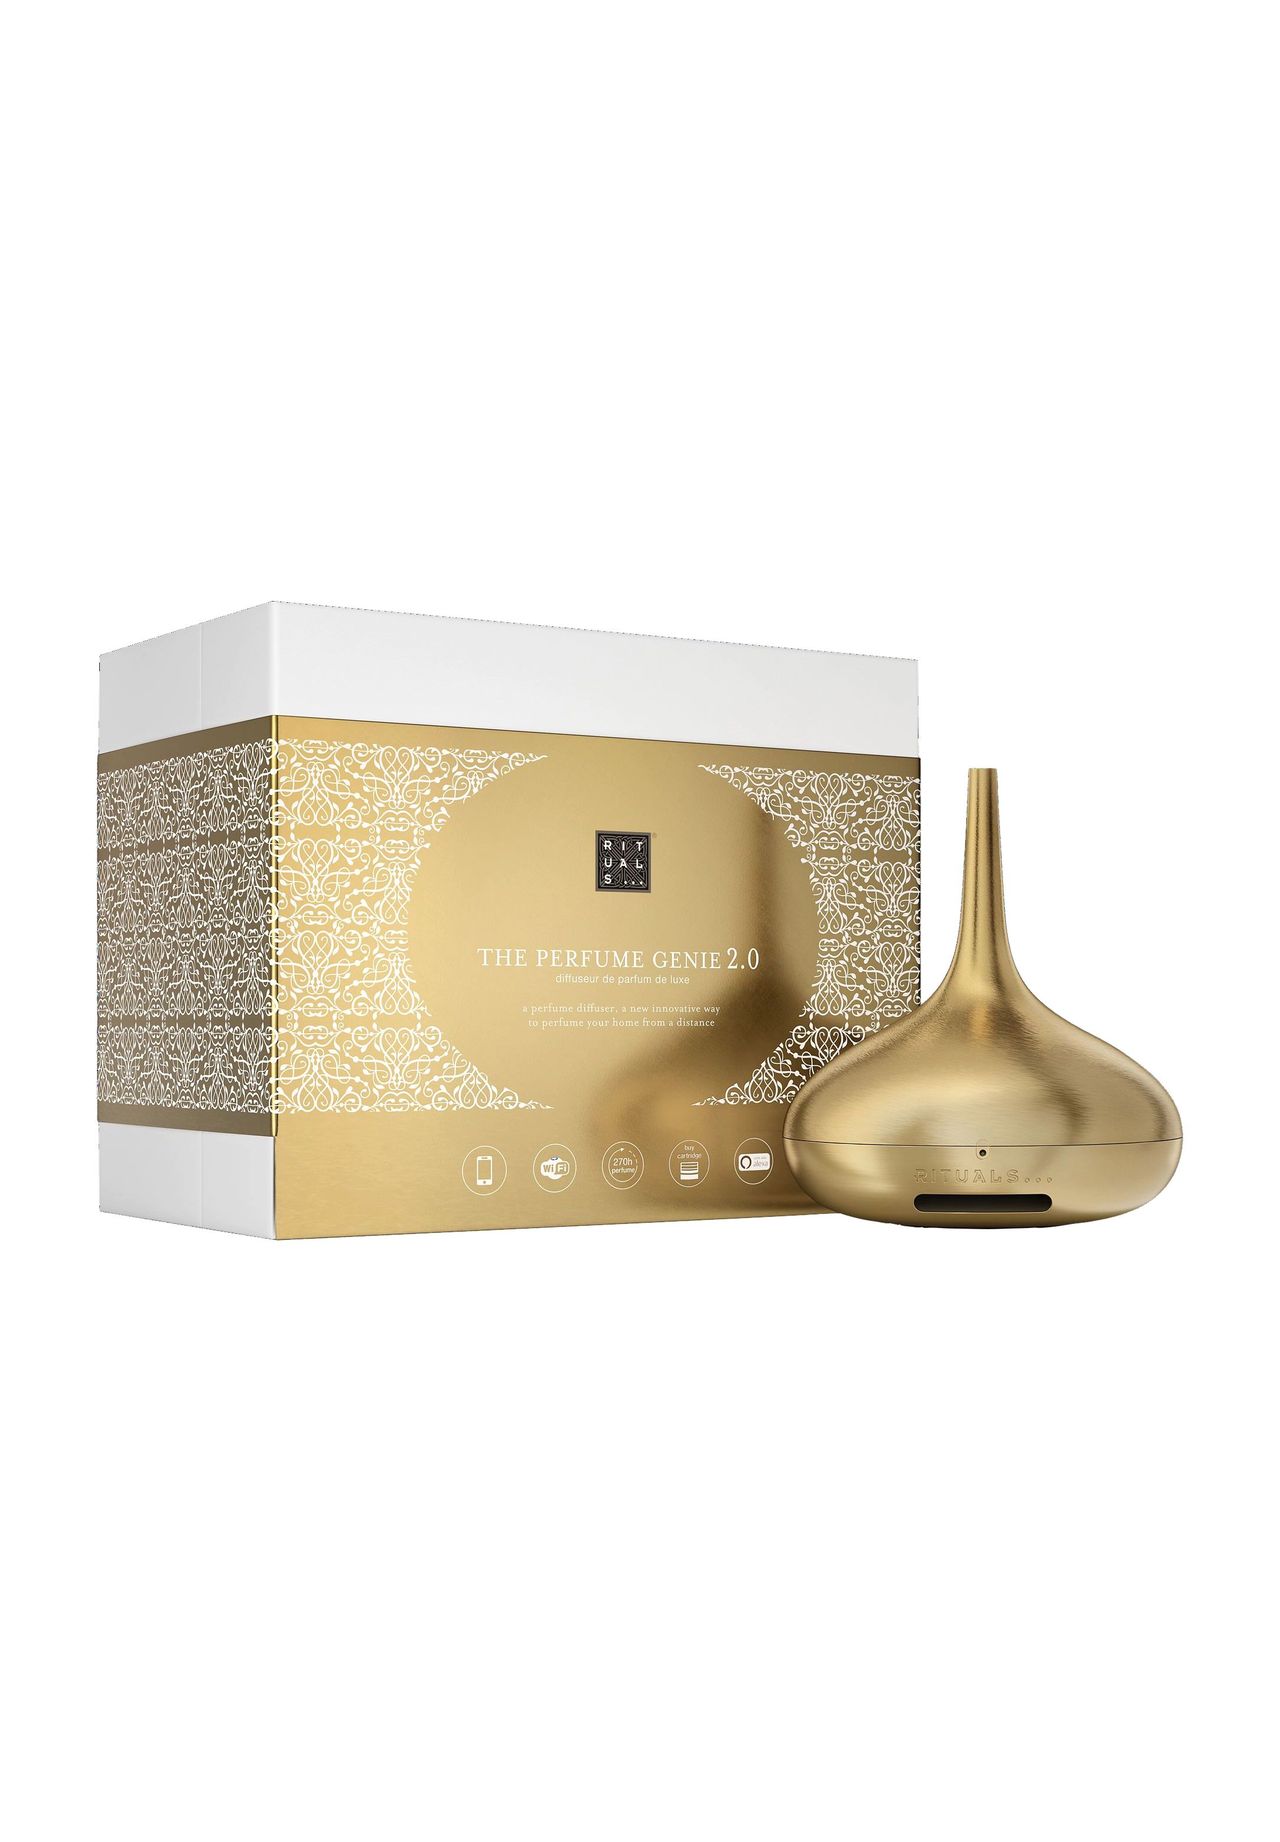 RITUALS® PRIVATE COLLECTION Parfum-Genie 2.0